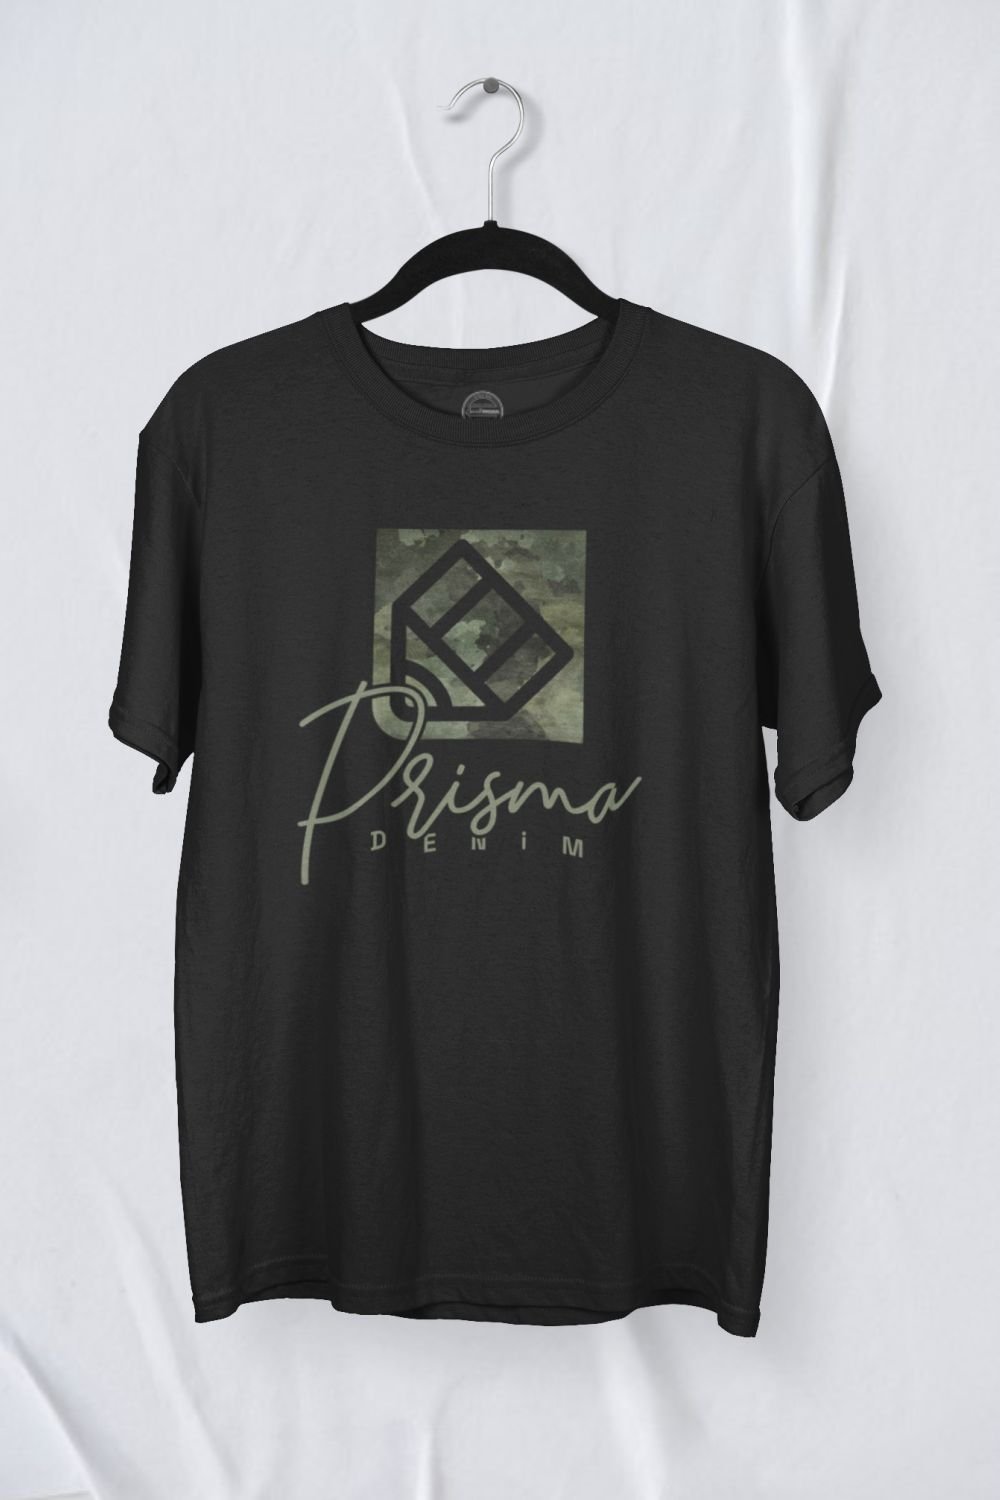 camiseta prisma denim menswear new logo preta